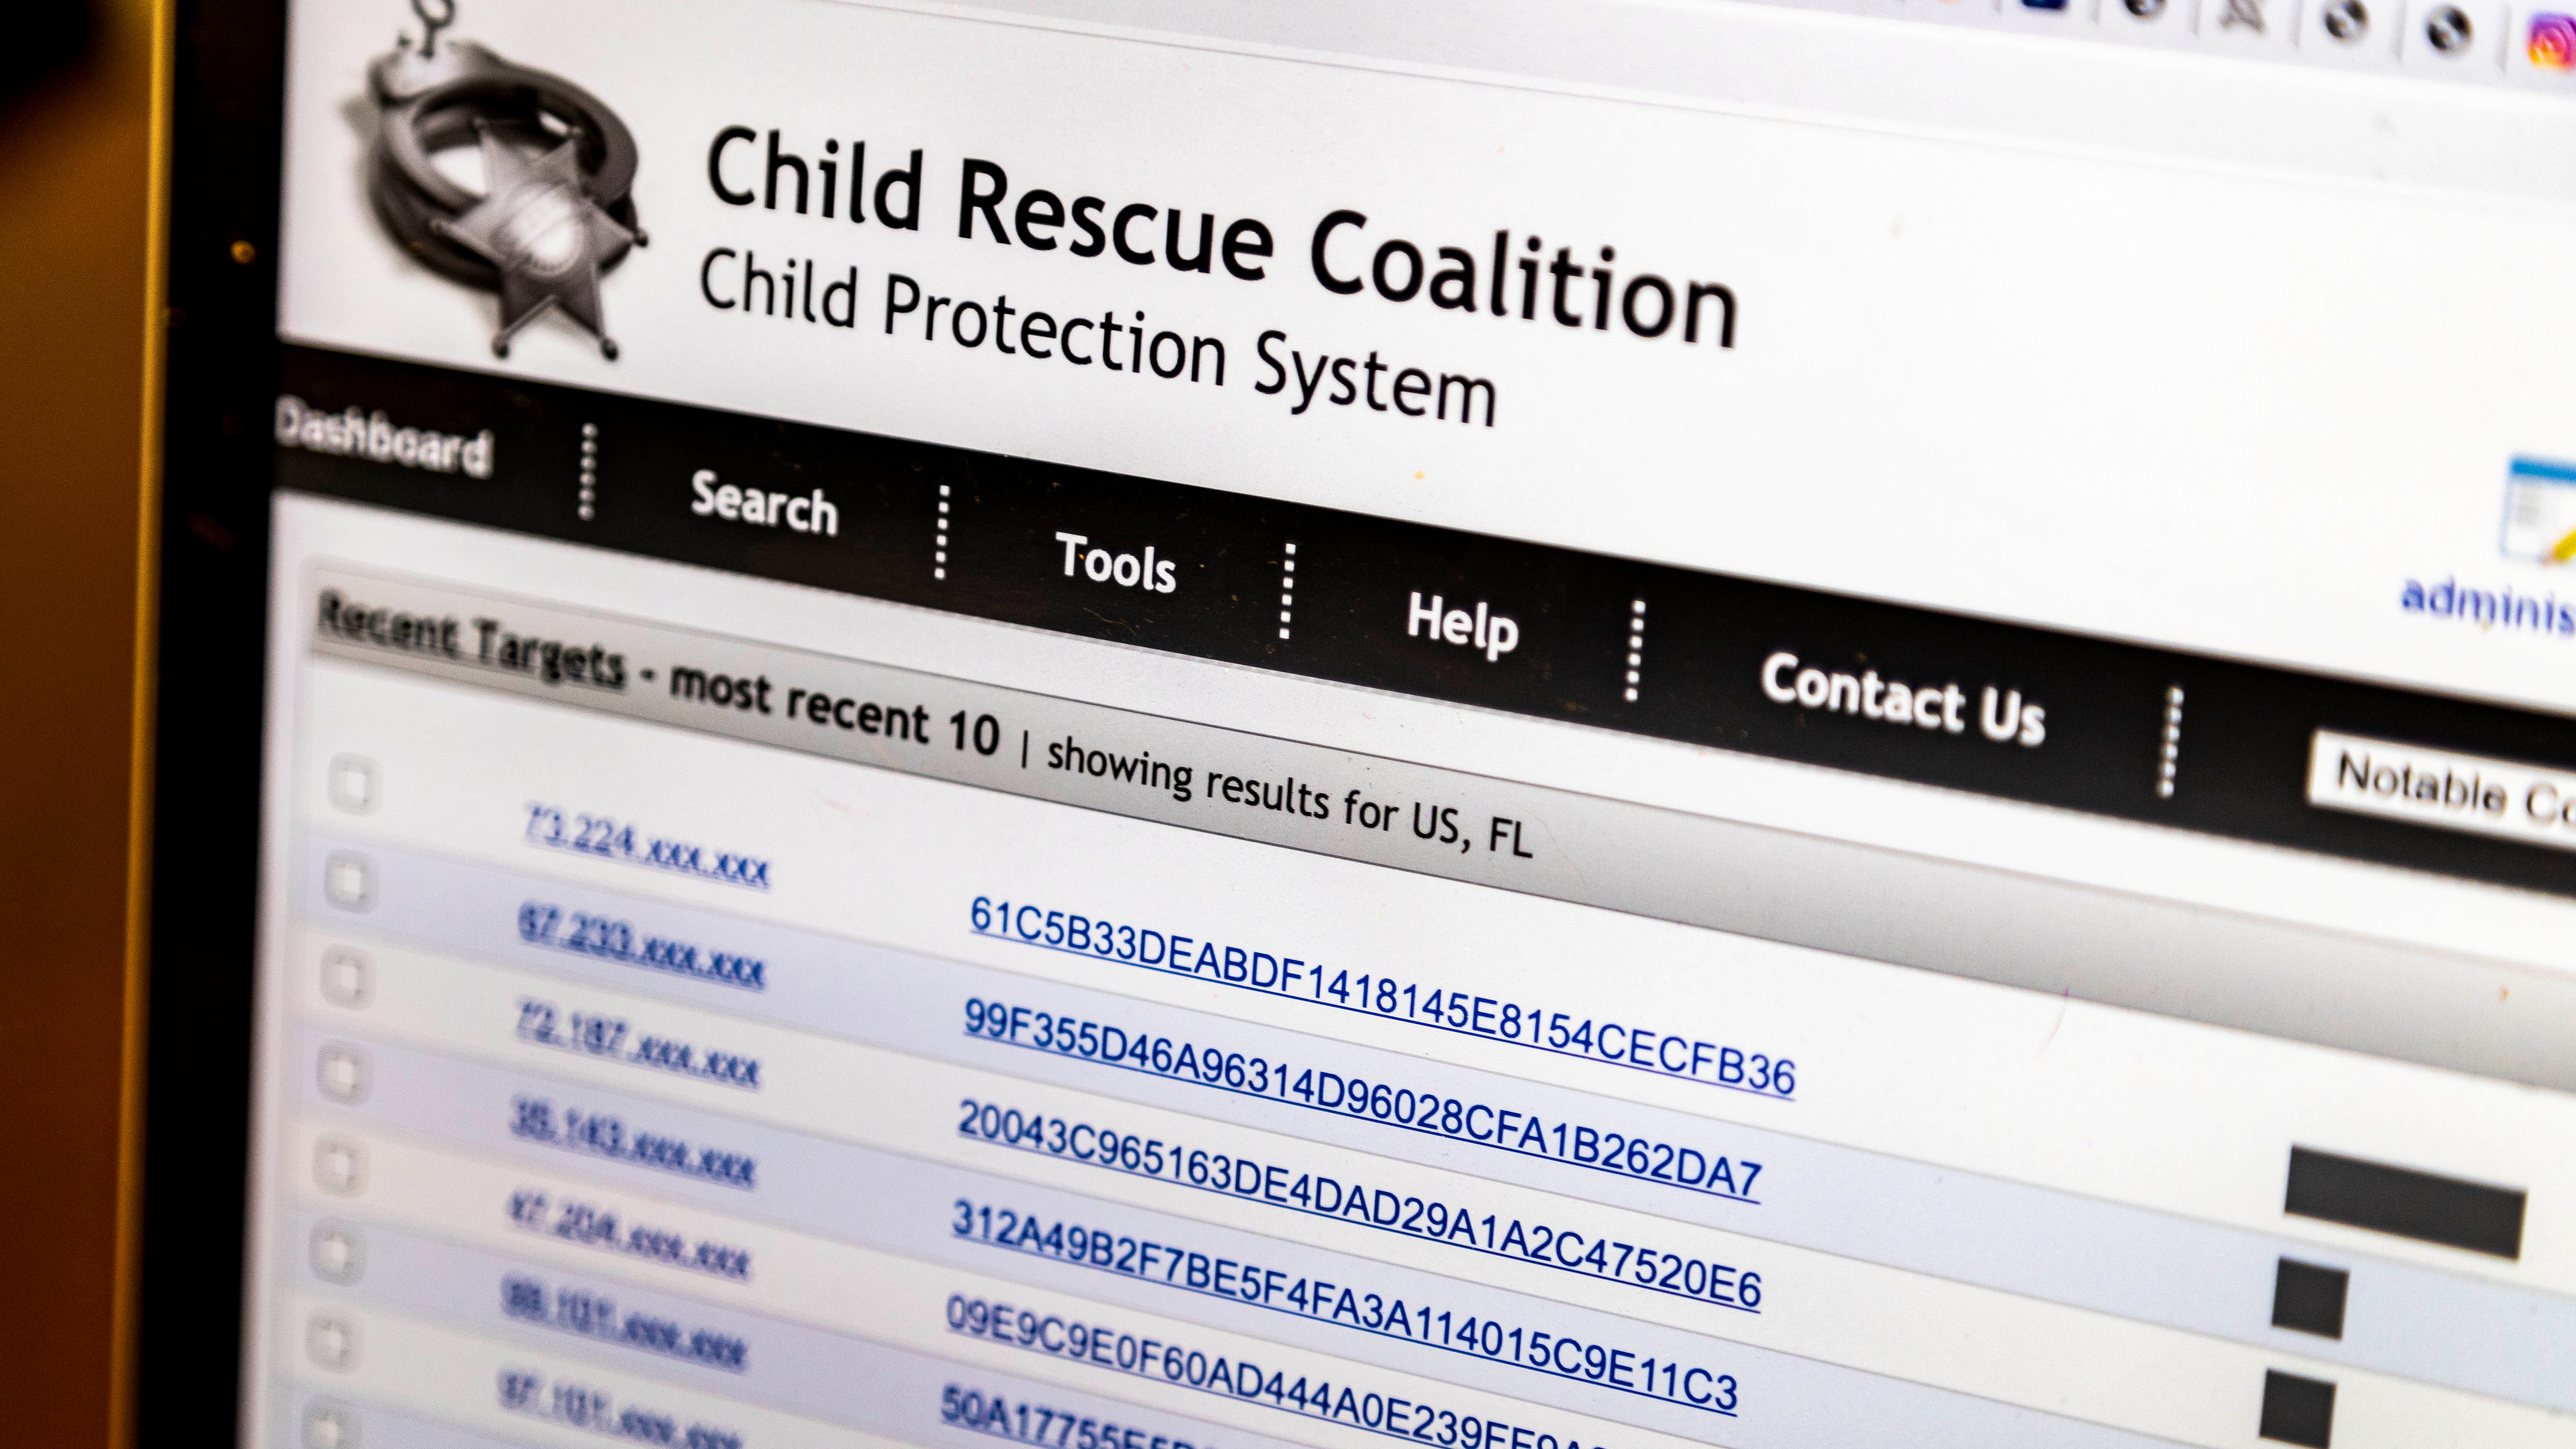 Sexi Short Raip Xxx - Online child sex abuse at a crisis level: Can Biden help solve it?